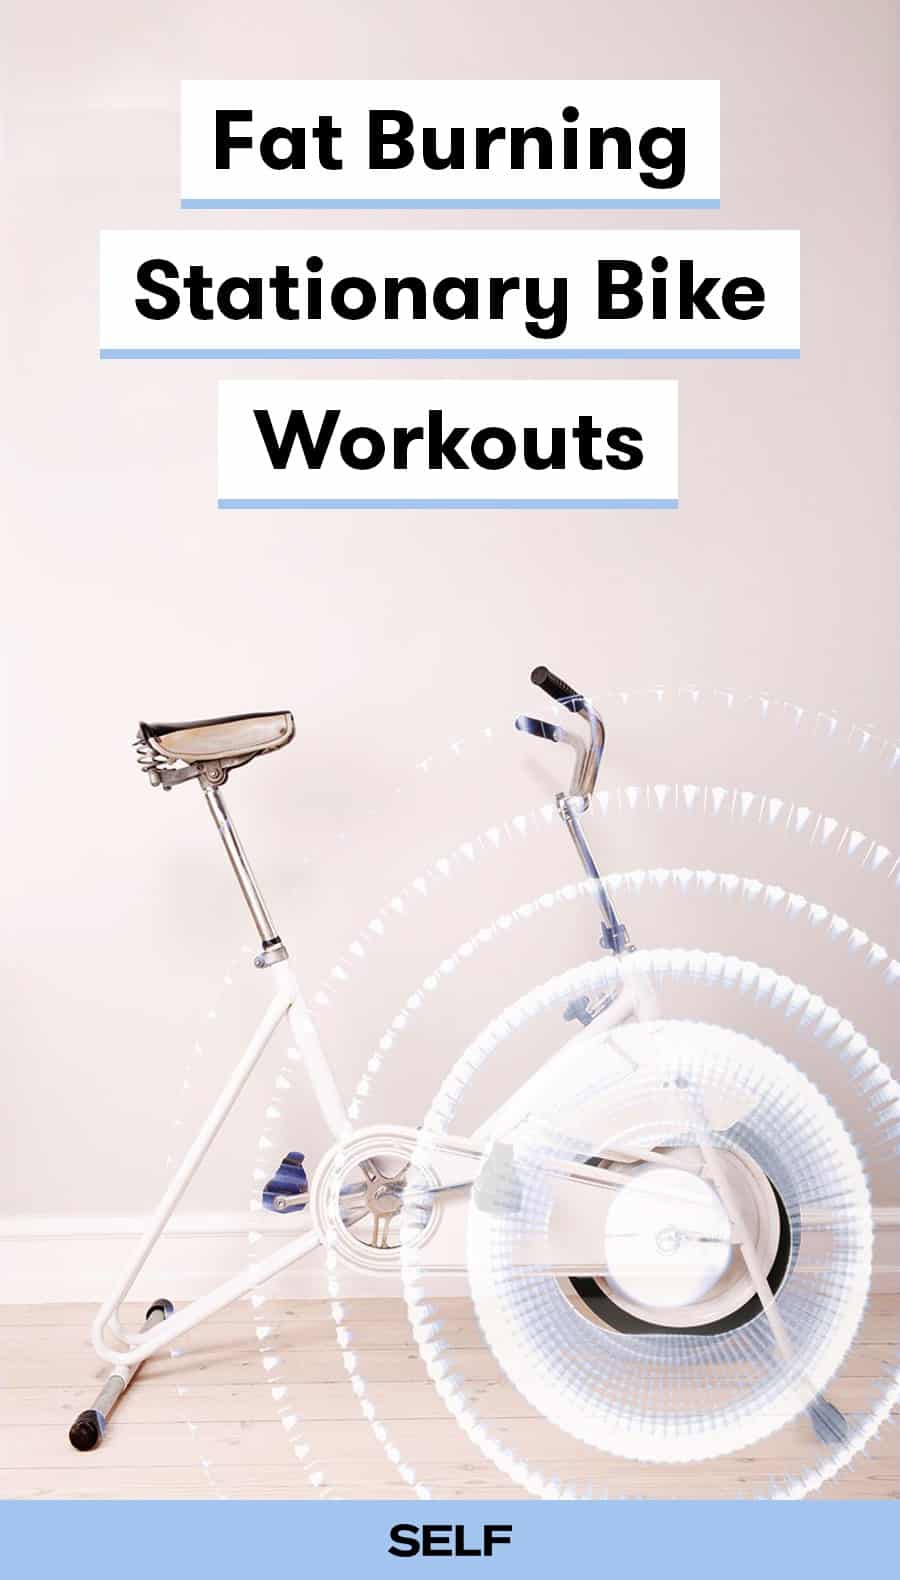 4 Stationary Bike Workouts That Burn Fat